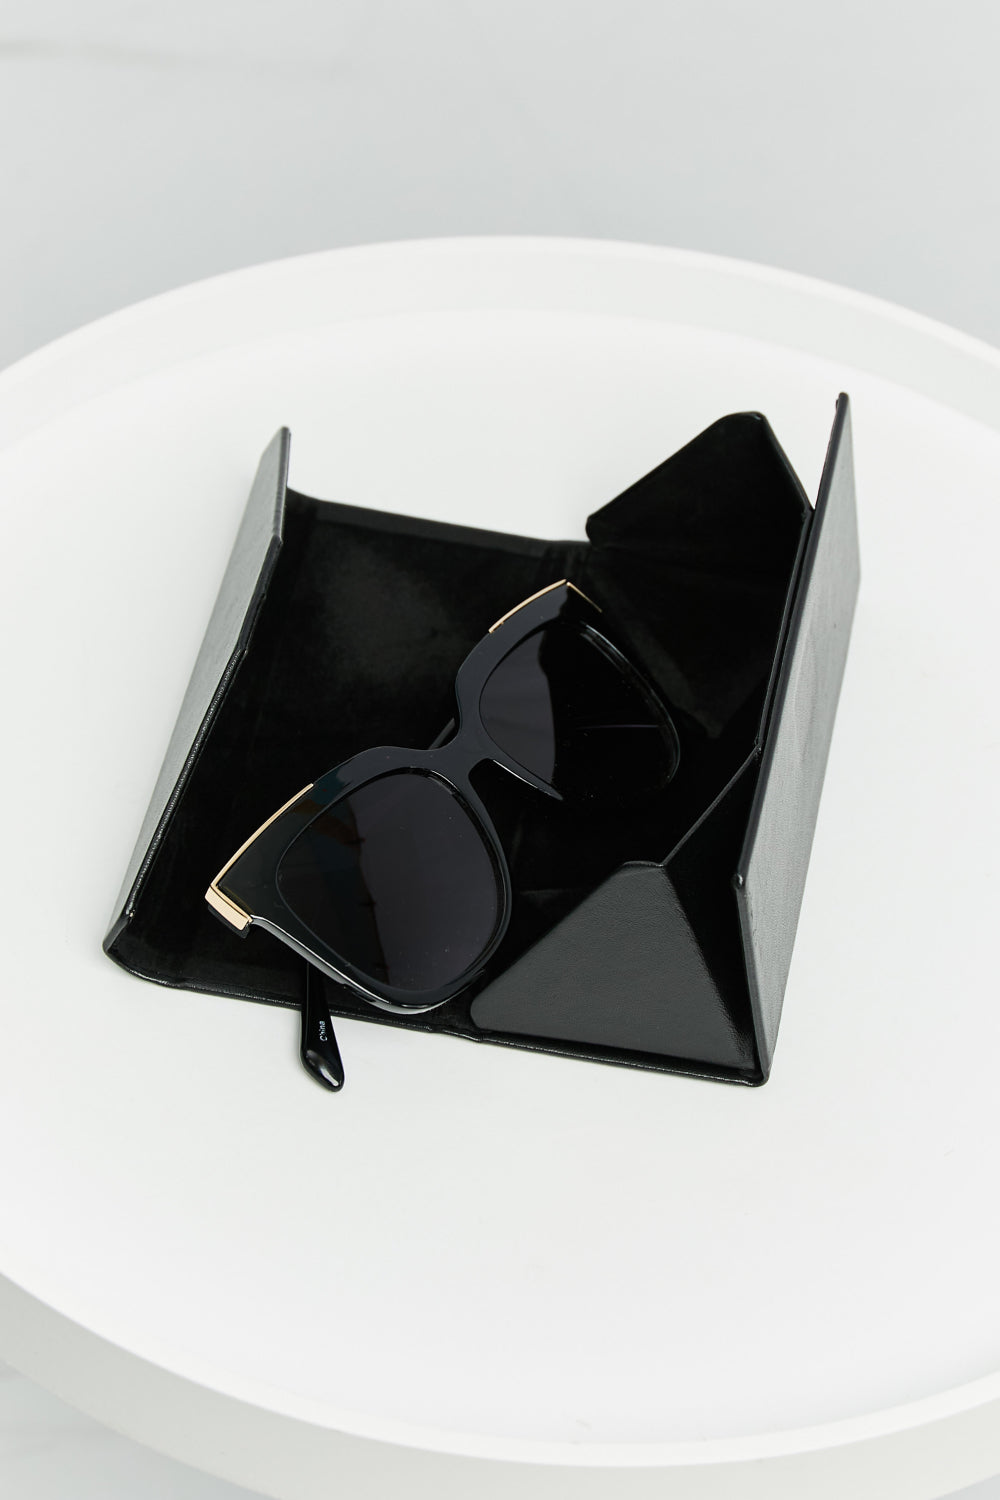 - Tortoiseshell Acetate Frame Sunglasses - Sunglasses at TFC&H Co.